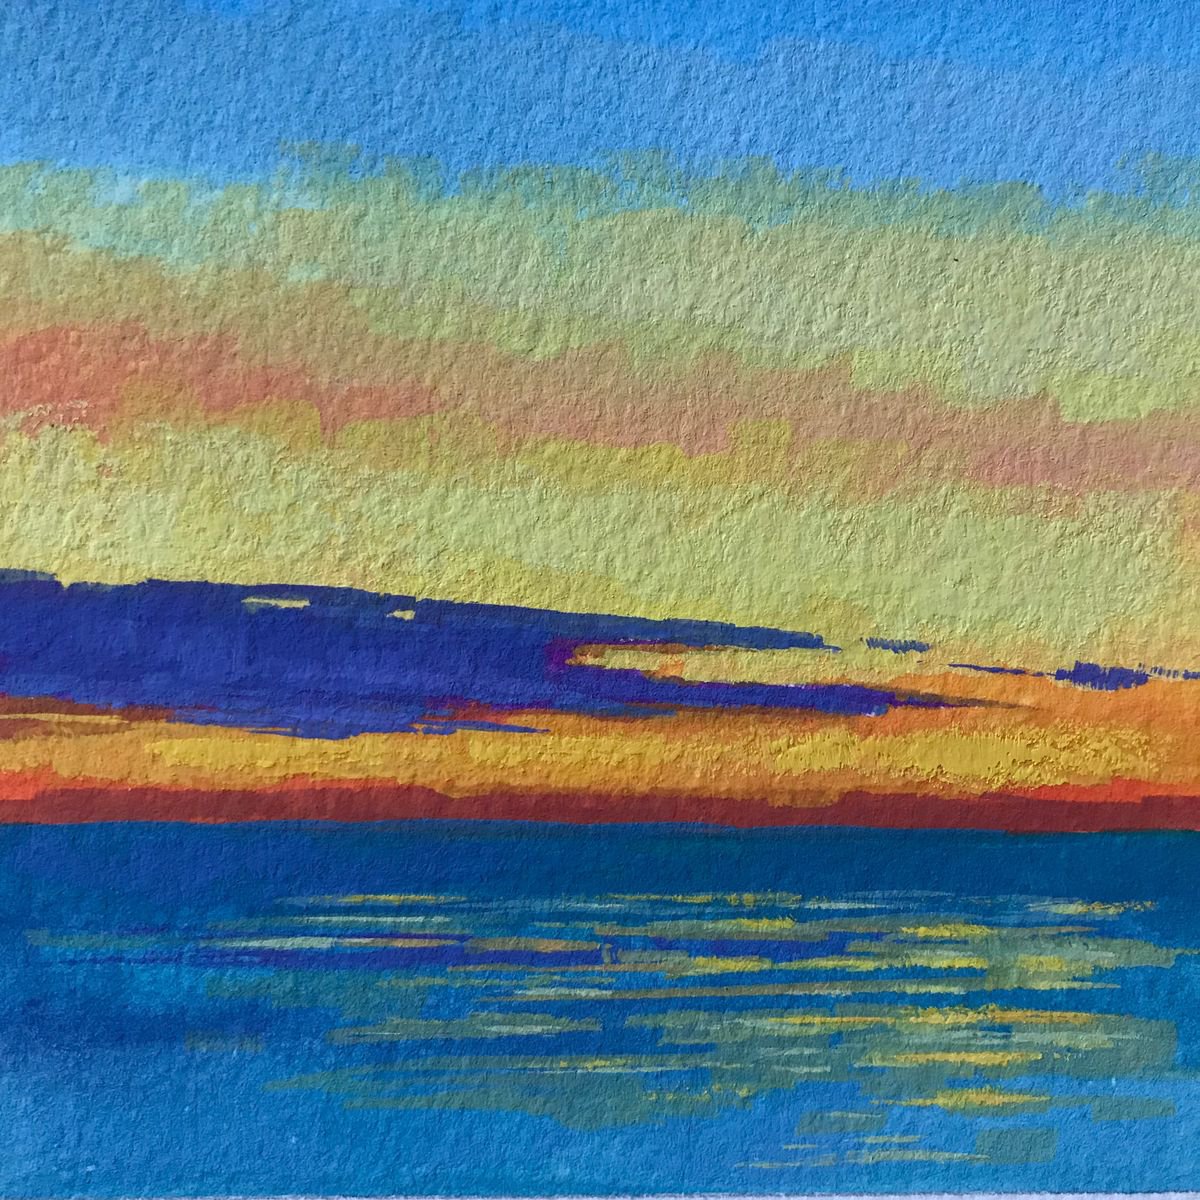 Sunrise Over Chesapeake Bay by Jimmy Leslie